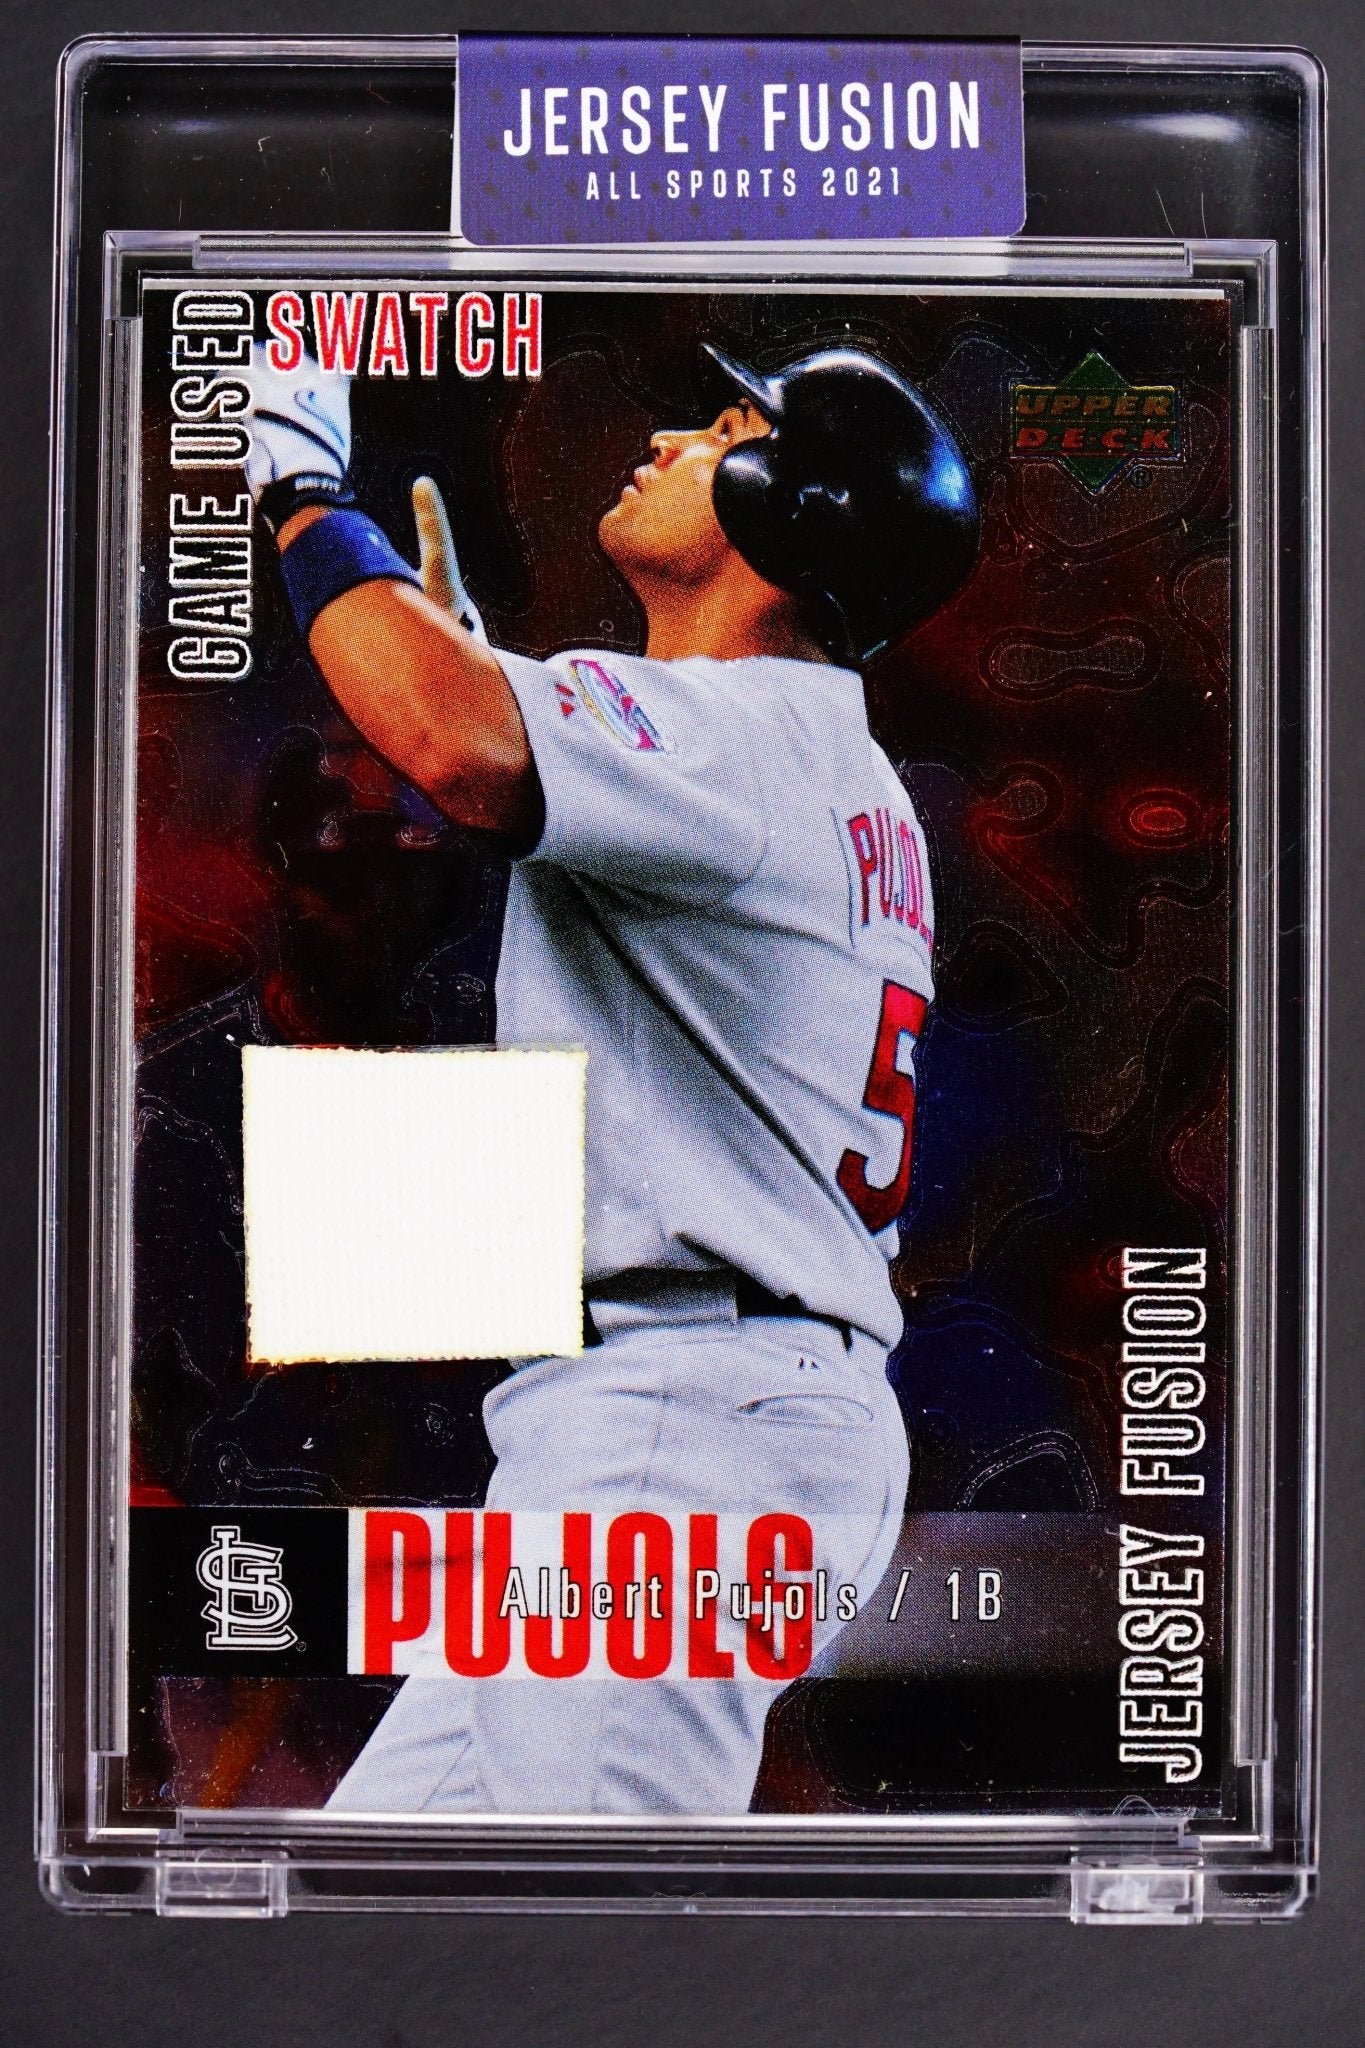 Baseball Card: Albert Pujols GAME USED - THE CARD SPOT PTY LTD.Sports CardJersey Fusion